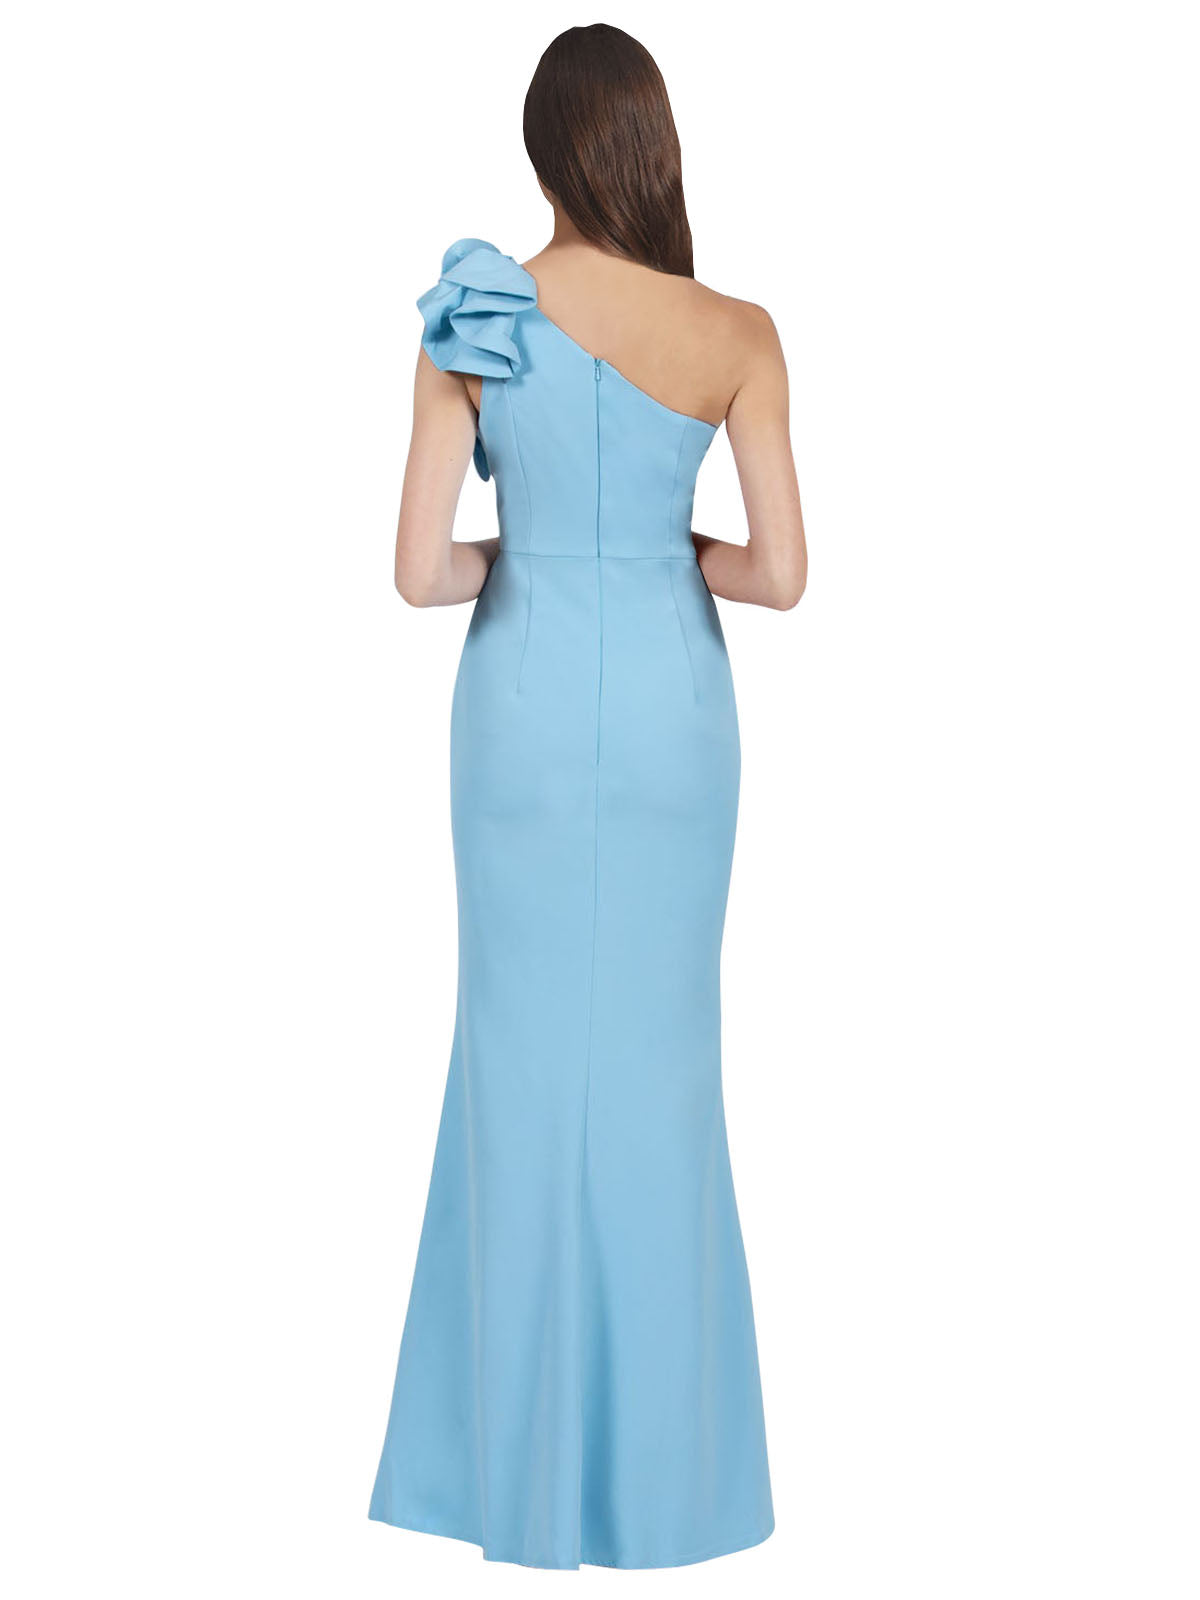 RightBrides Topia Long Sheath One Shoulder Floor Length Sleeveless Peacock-Blue Stretch Crepe Bridesmaid Dress